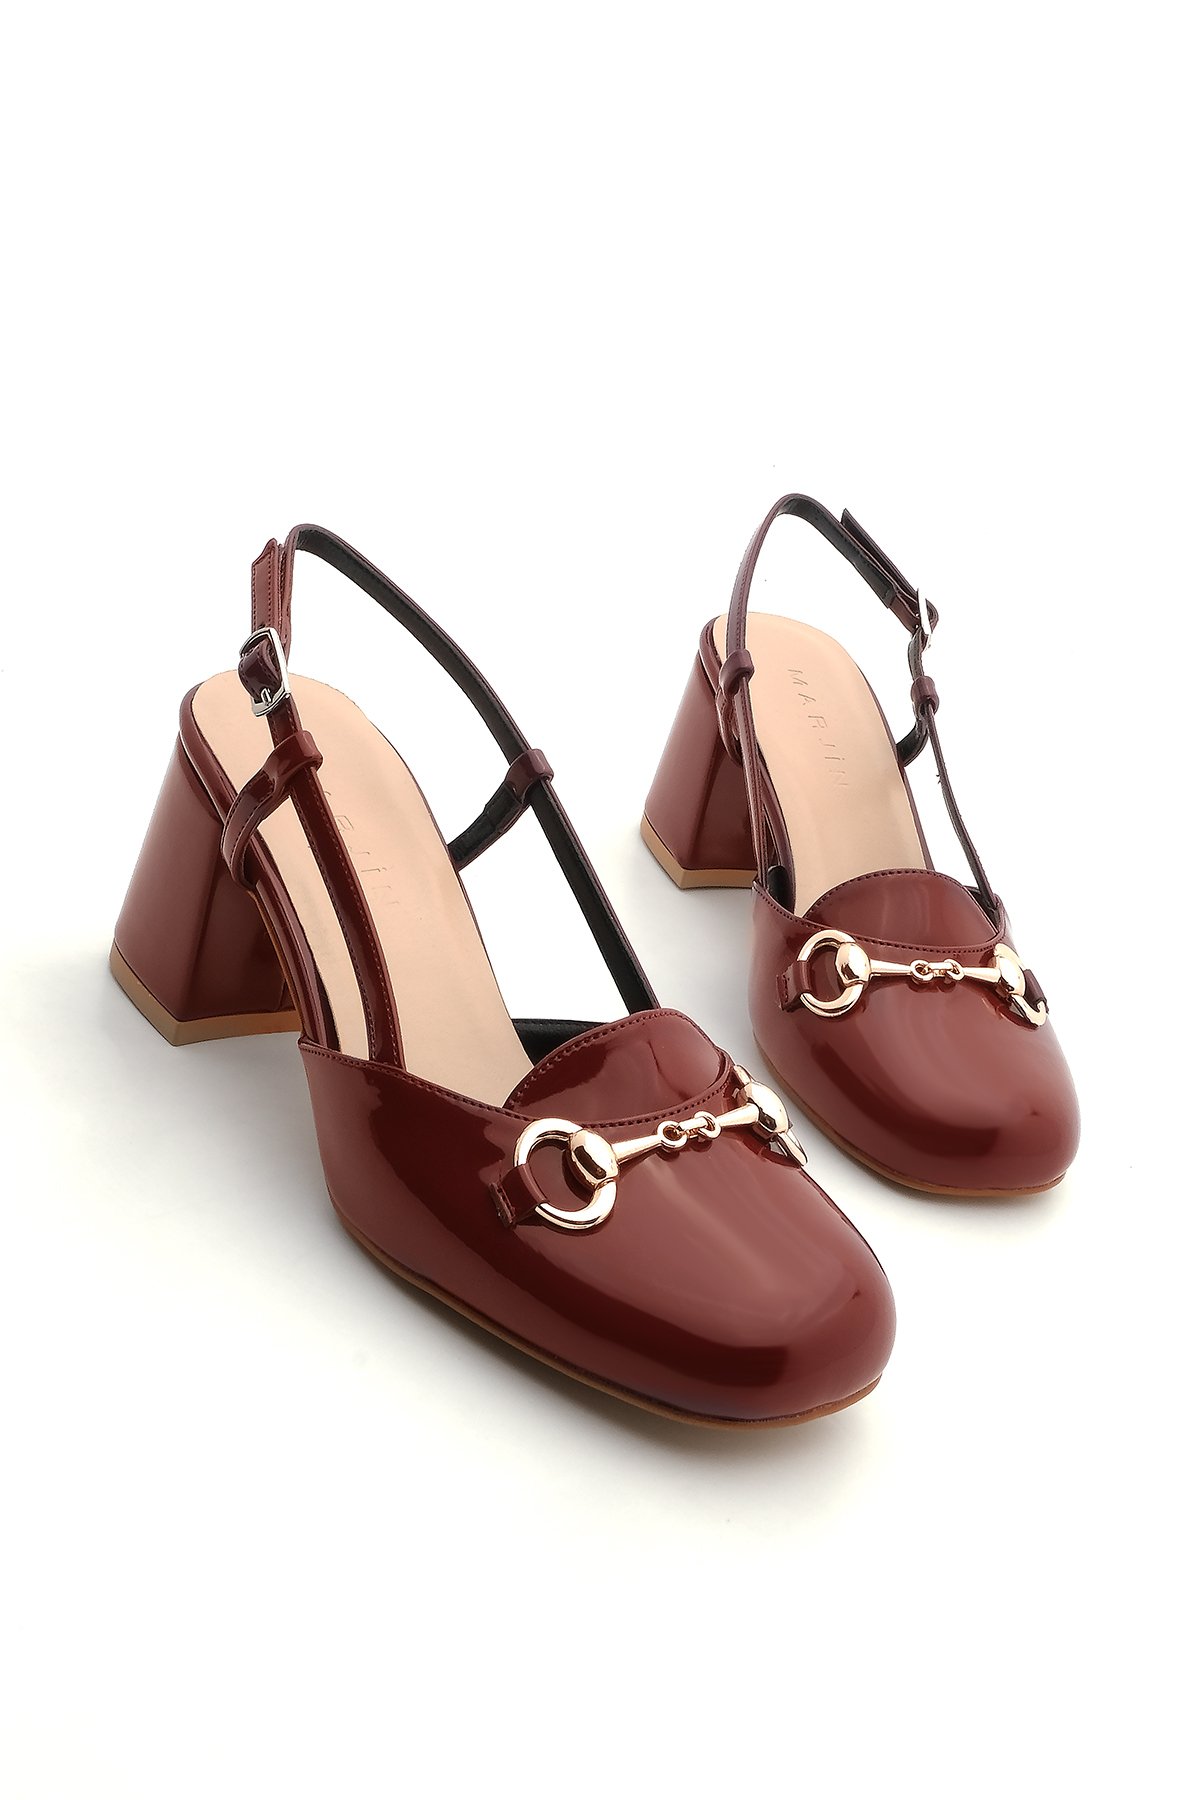 Marjin Women's Chunky Heel Buckled Open Back Classic Heeled Shoes Mirka Burgundy Patent Leather